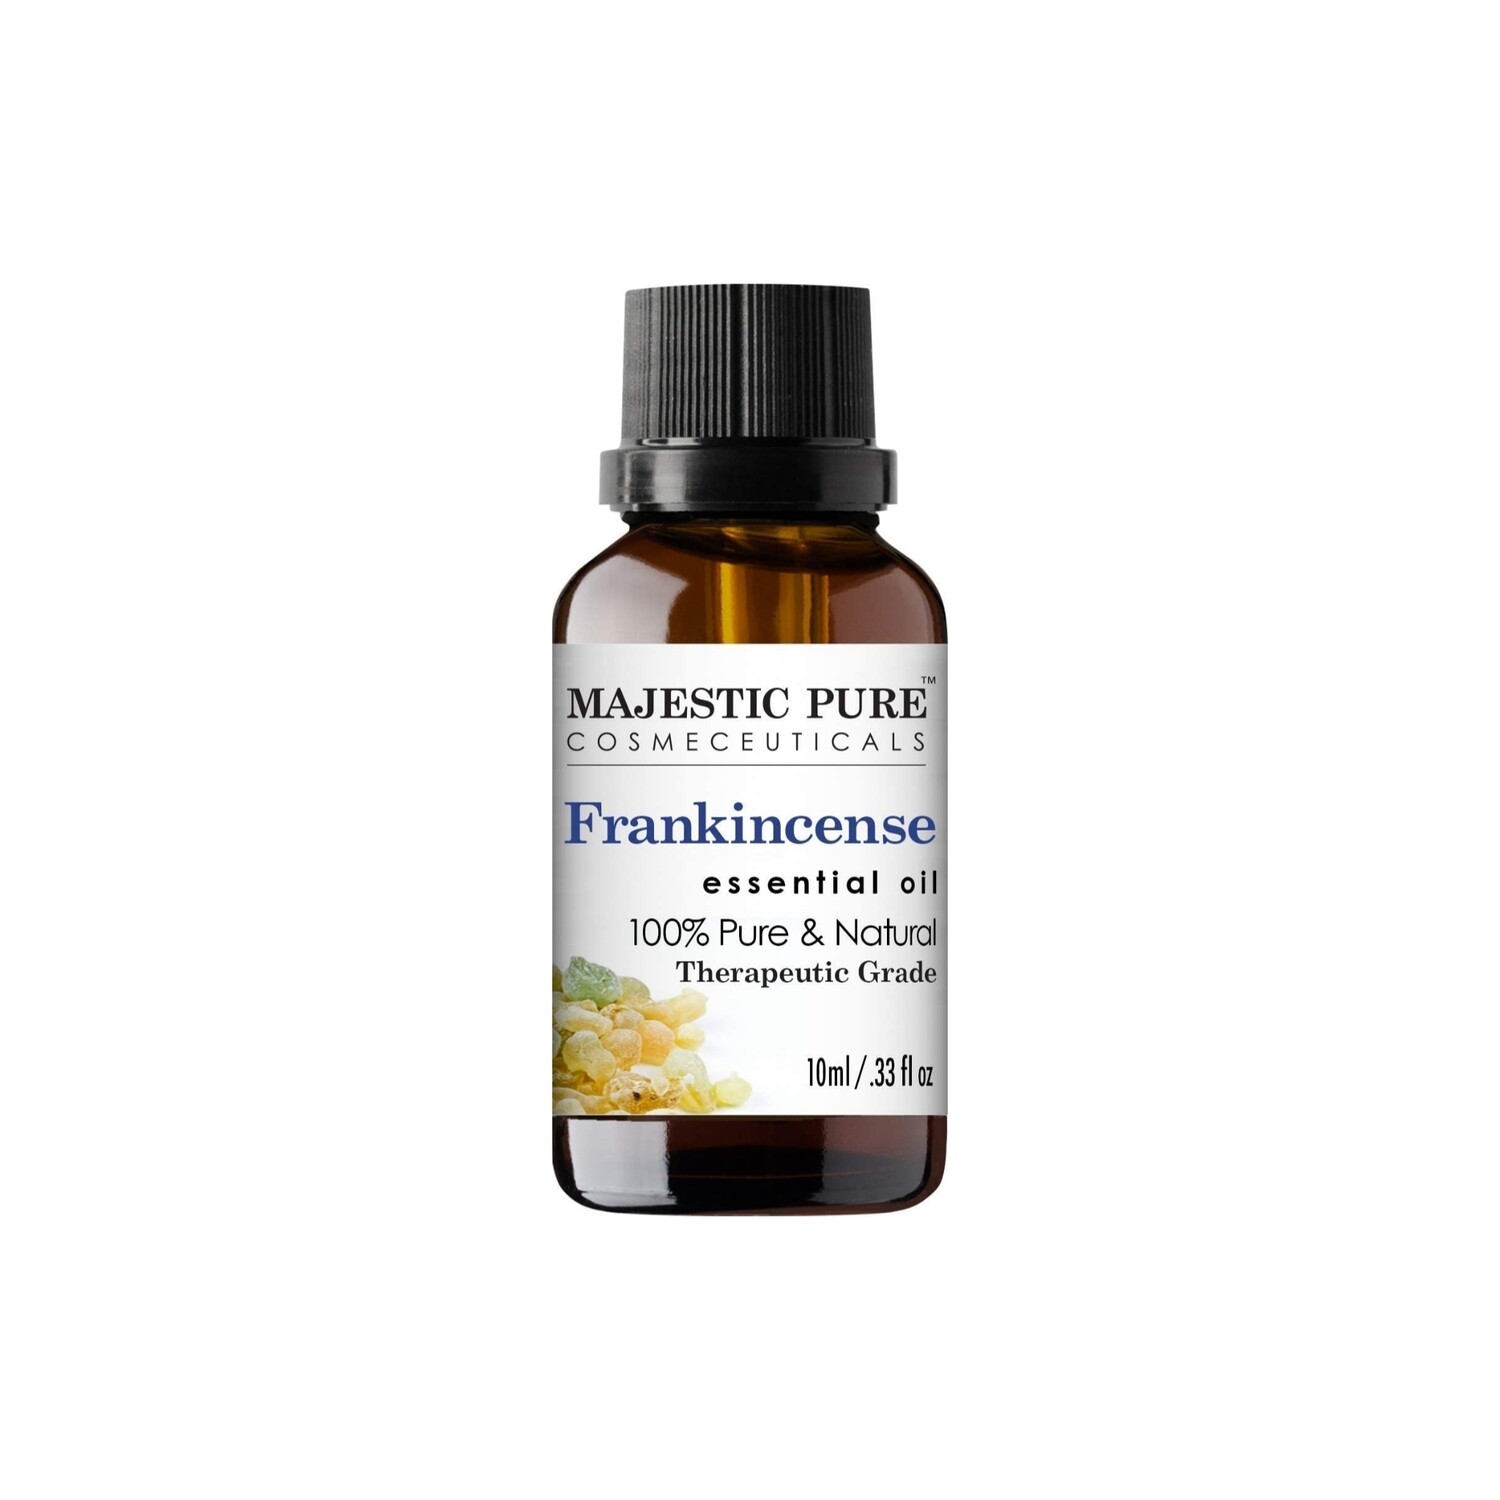 Magestic pure Frankincense essential oil 